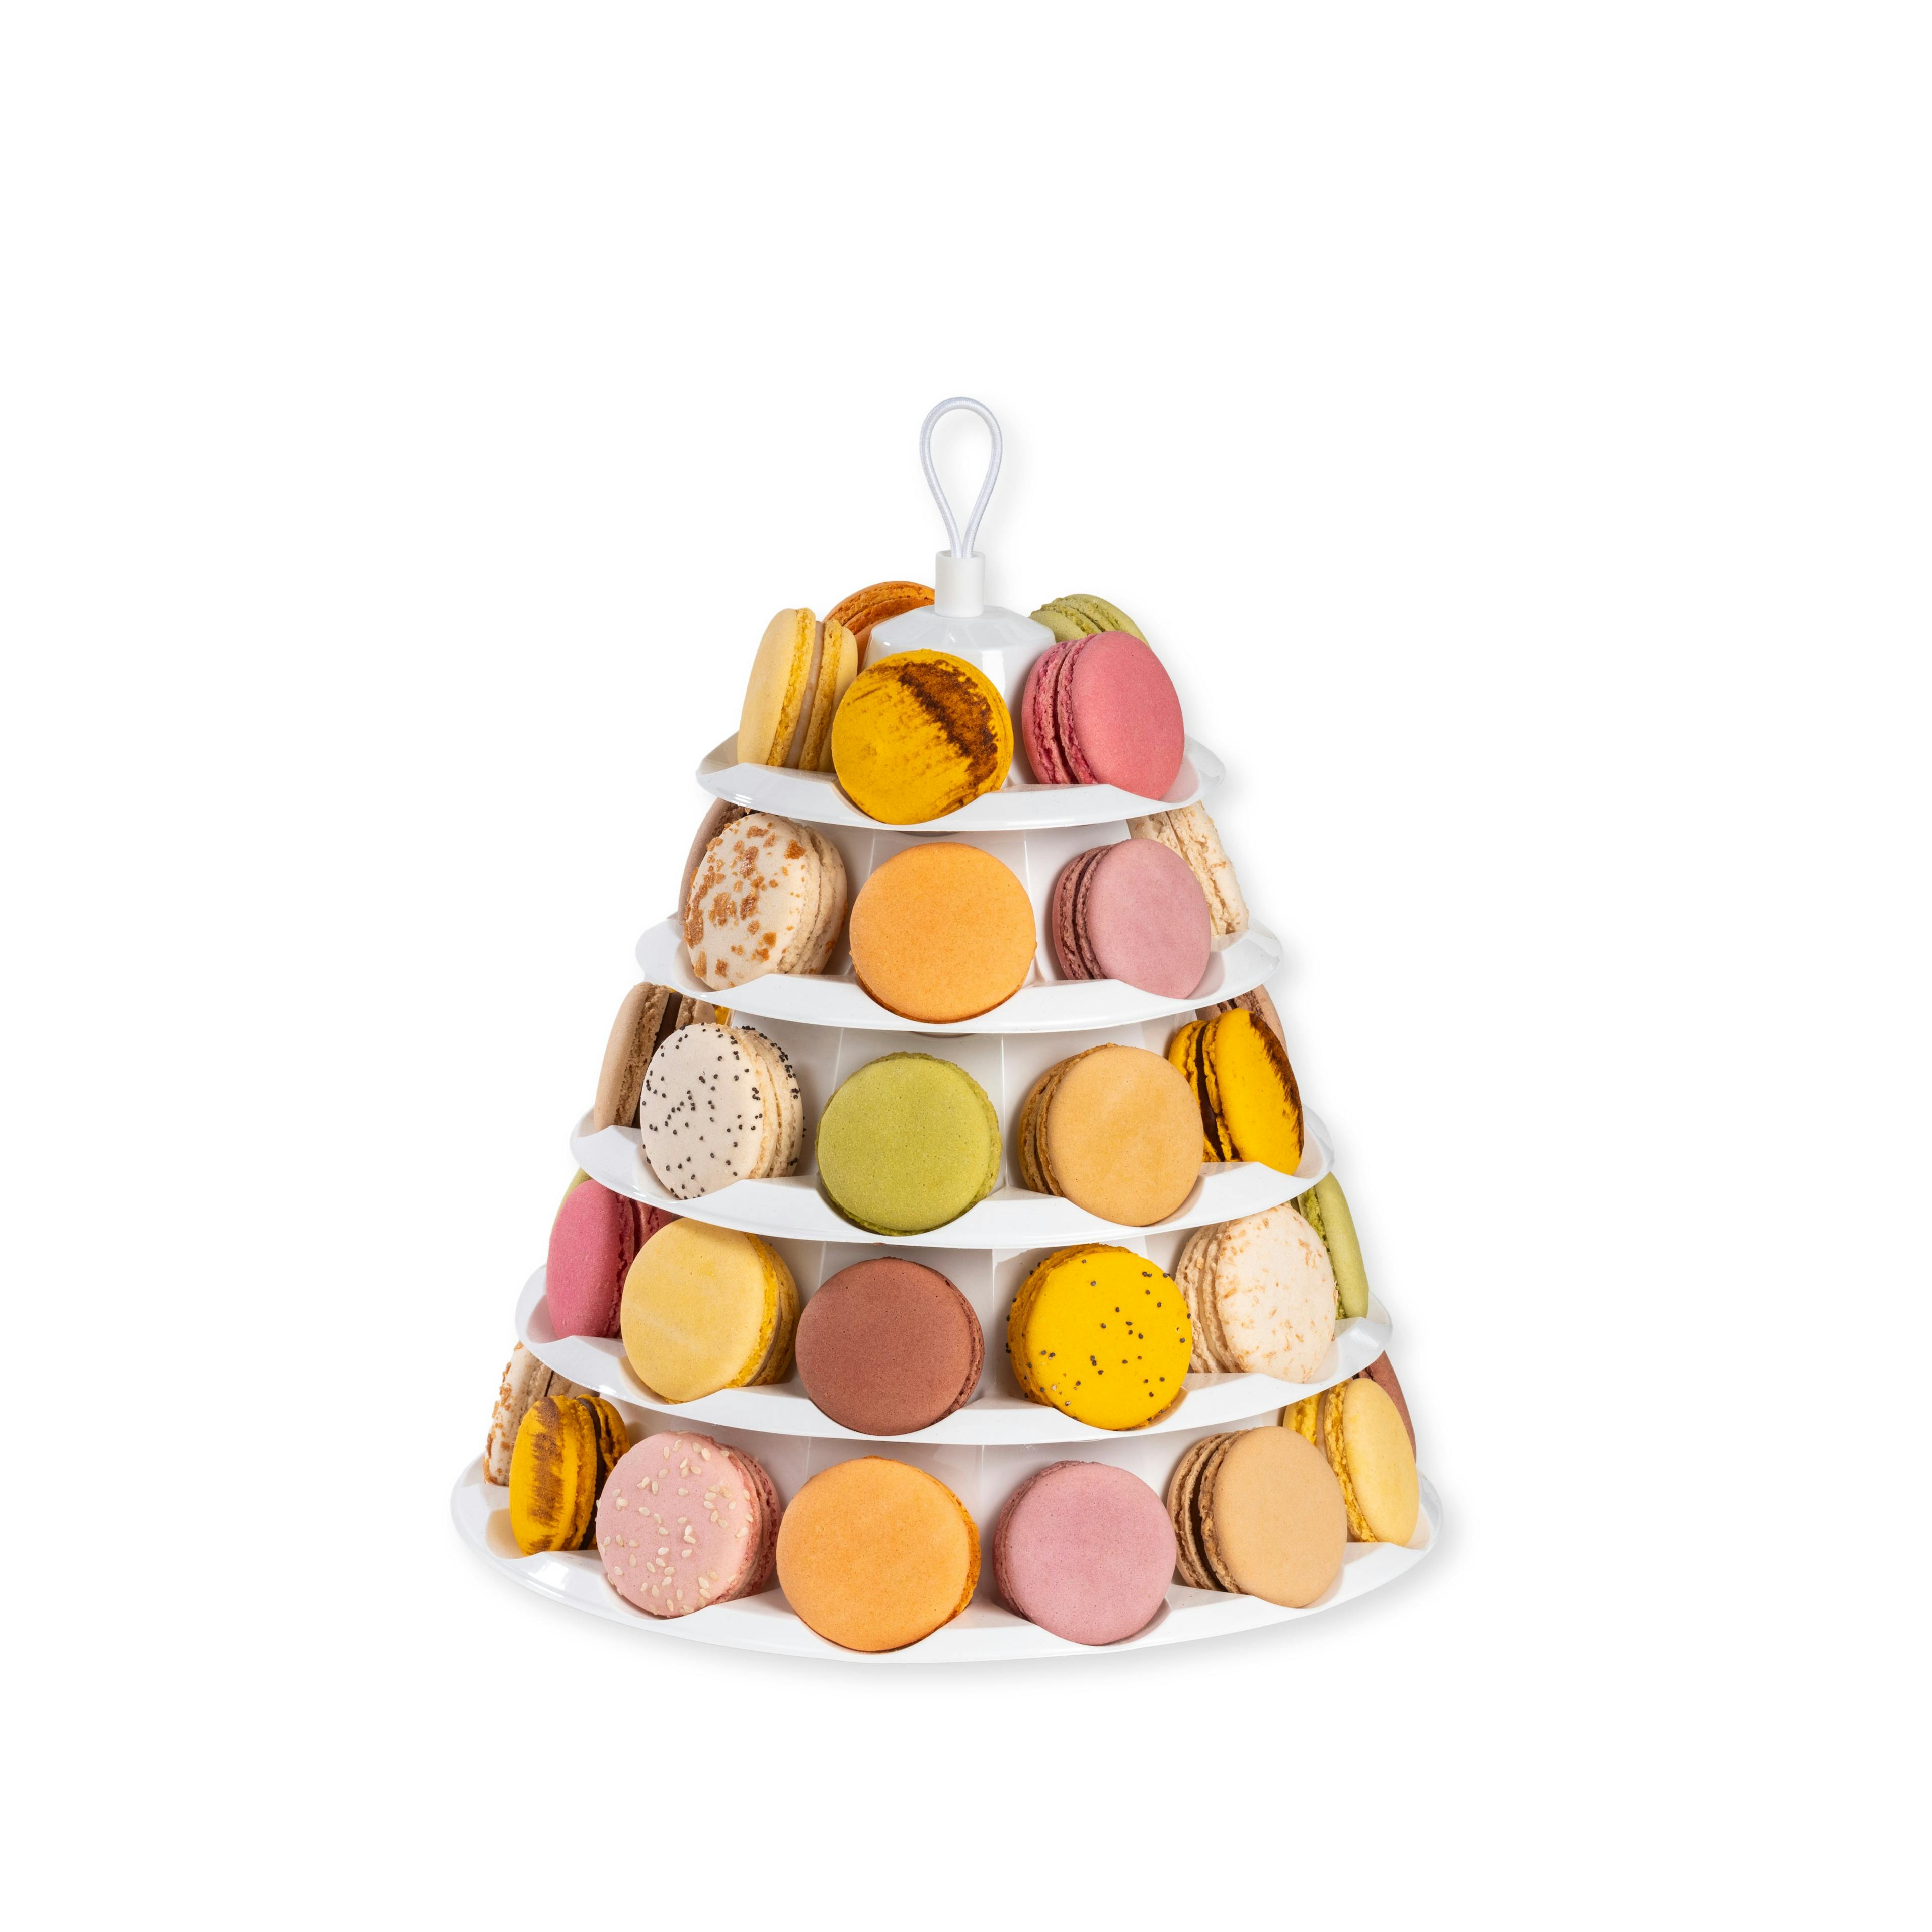 Pyramide 45 macarons - Vincent Vallée world champion chocolatier